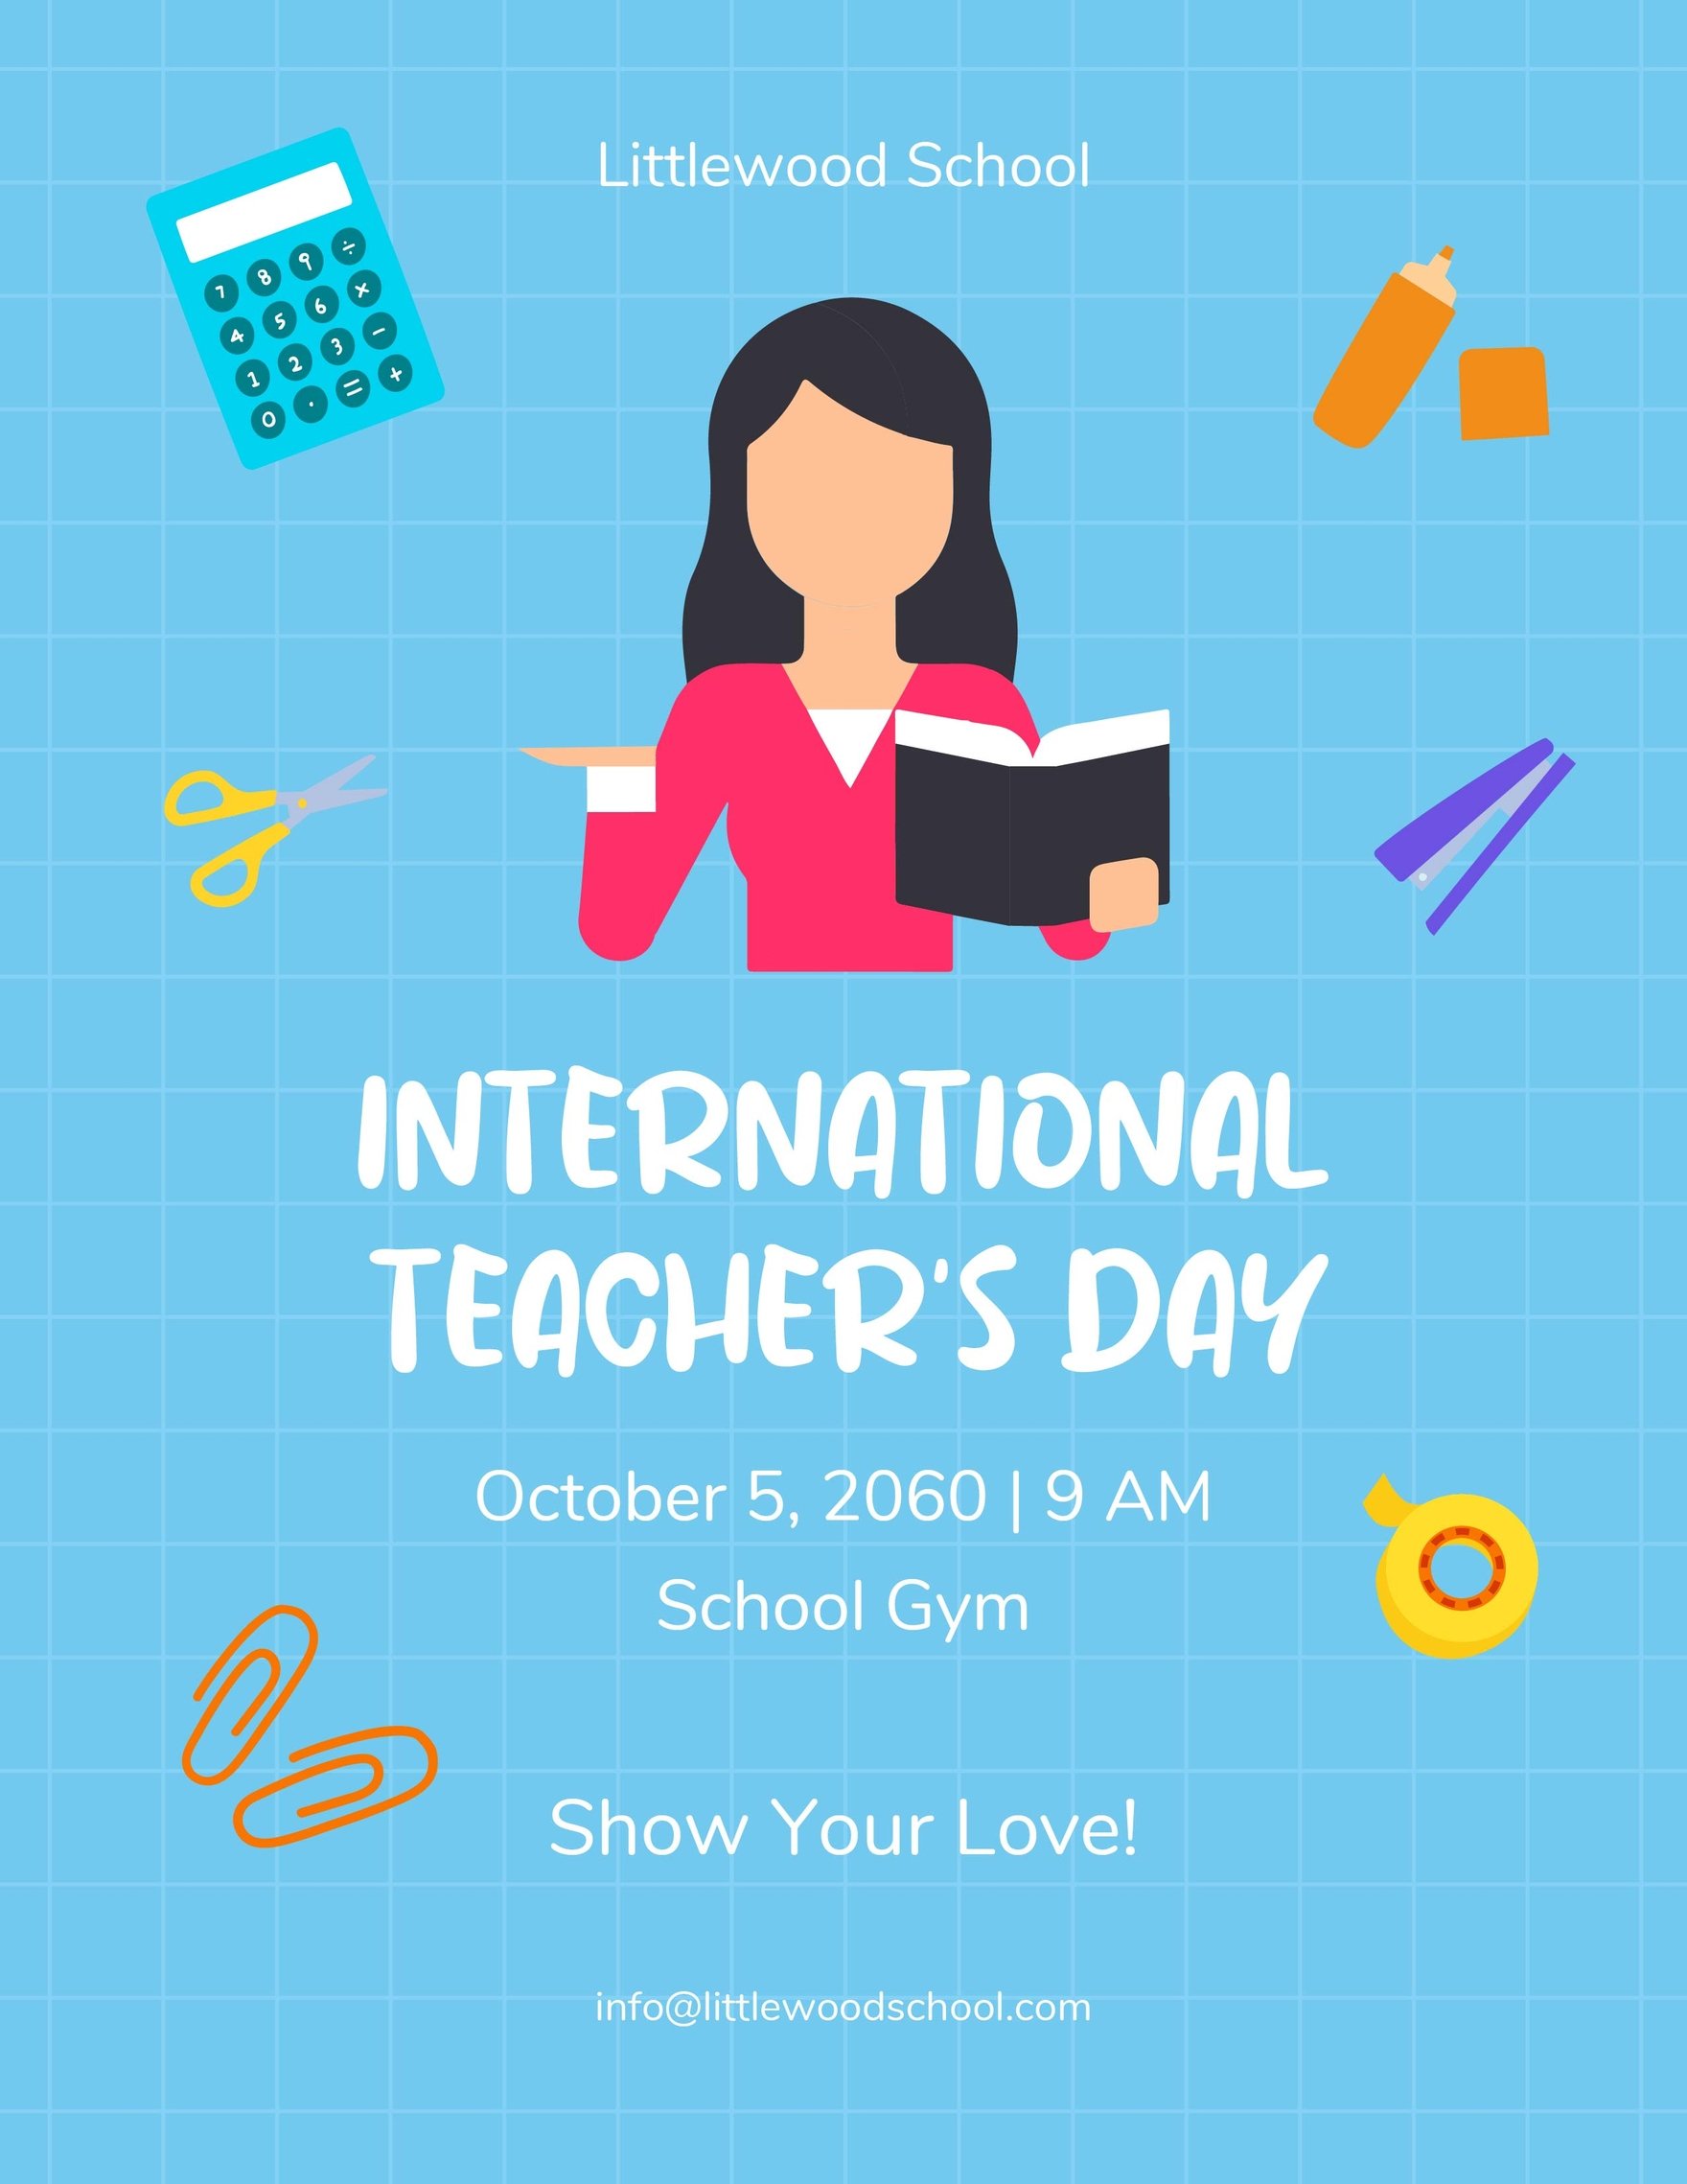 Free International Teacher's Day Flyer in Word, Google Docs, Illustrator, PSD, Apple Pages, EPS, SVG, JPG, PNG